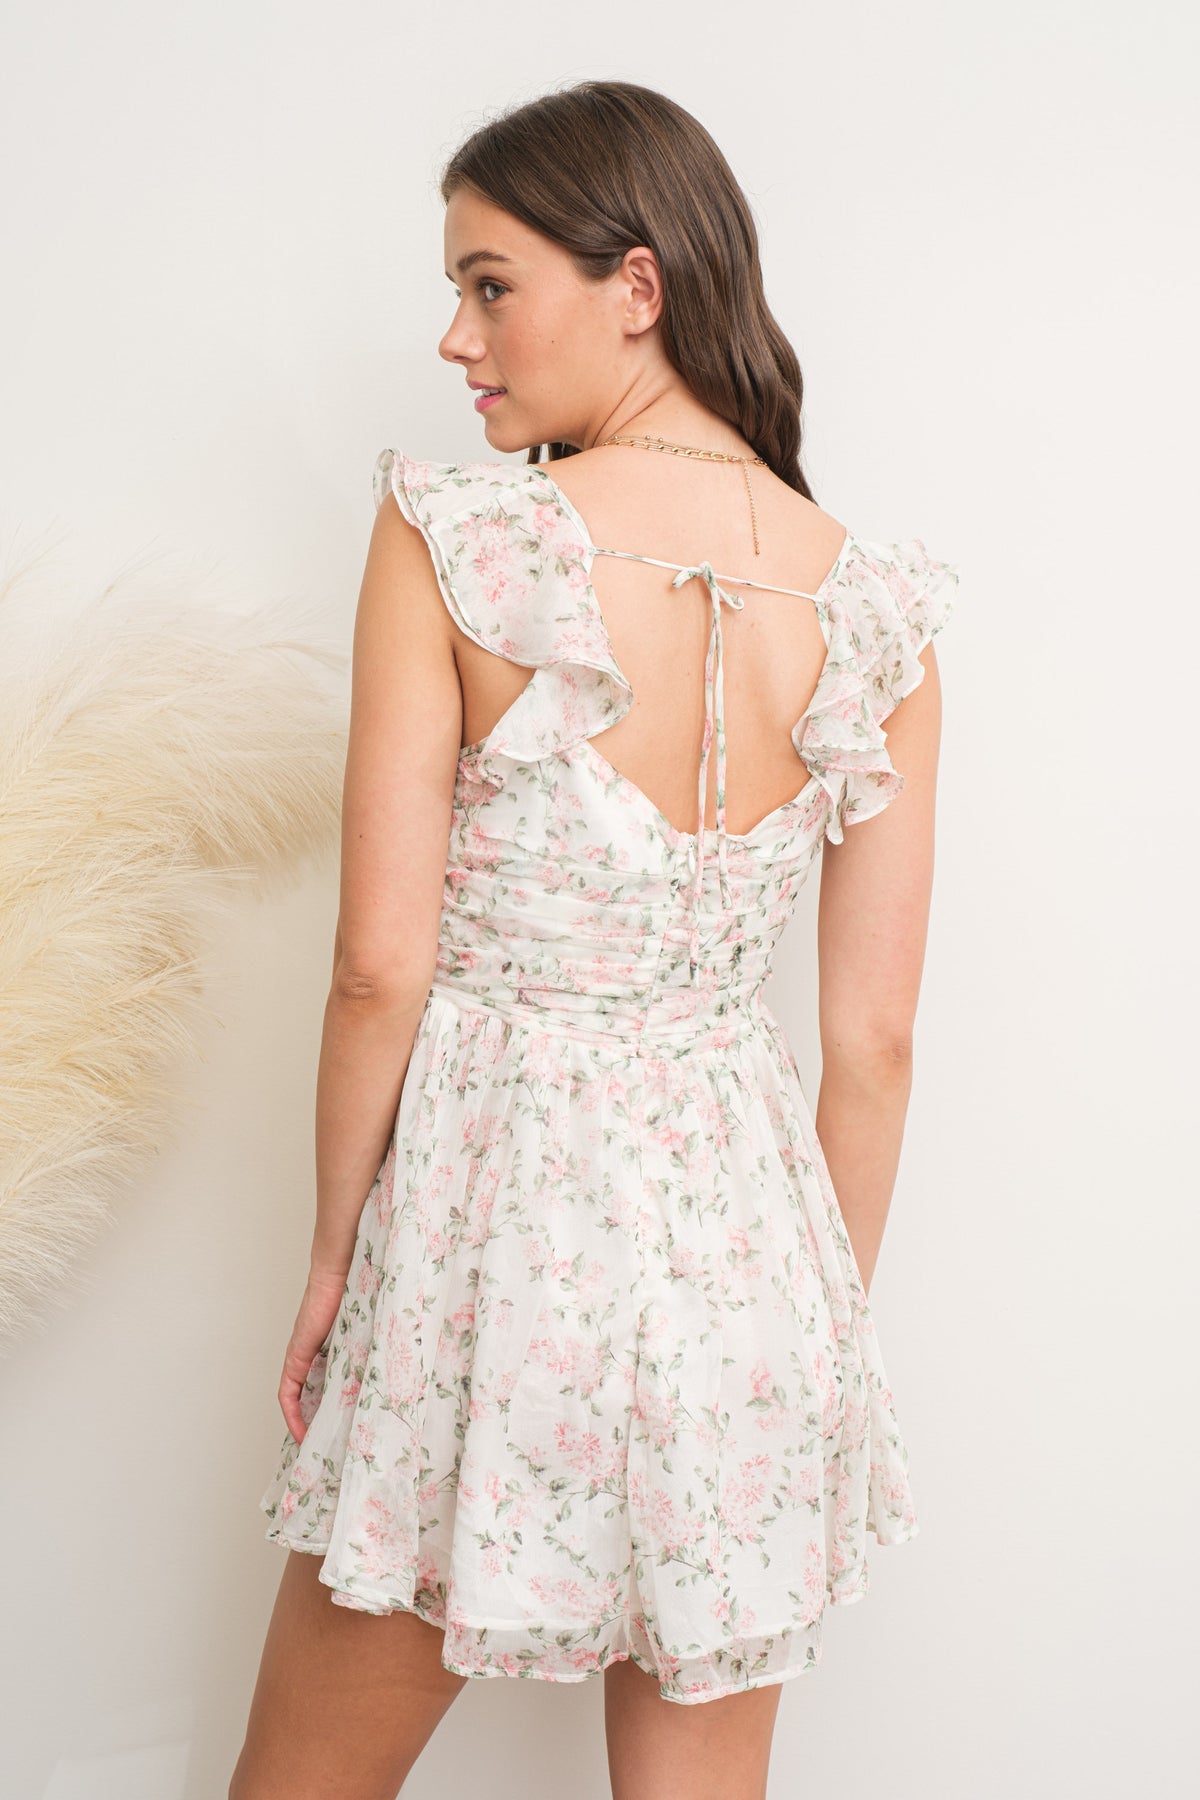 2225 | Floral Print Tie-strap Ruffled Dress $15.50 Unit